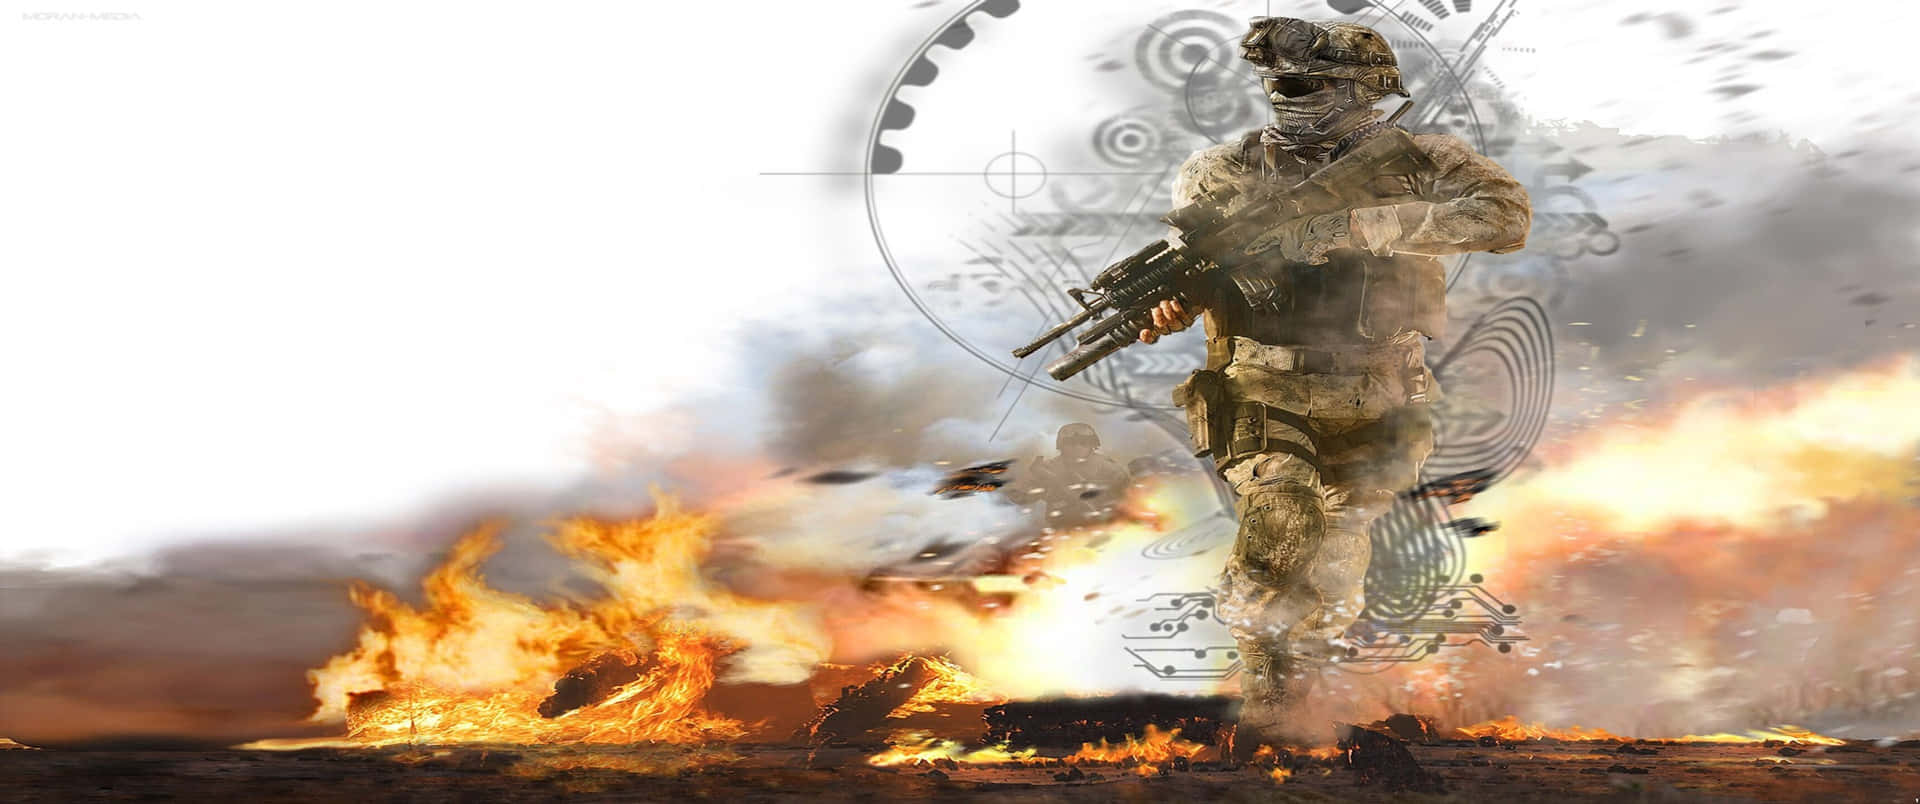 Eldigbakgrund 3440x1440p Call Of Duty Modern Warfare Bakgrund.